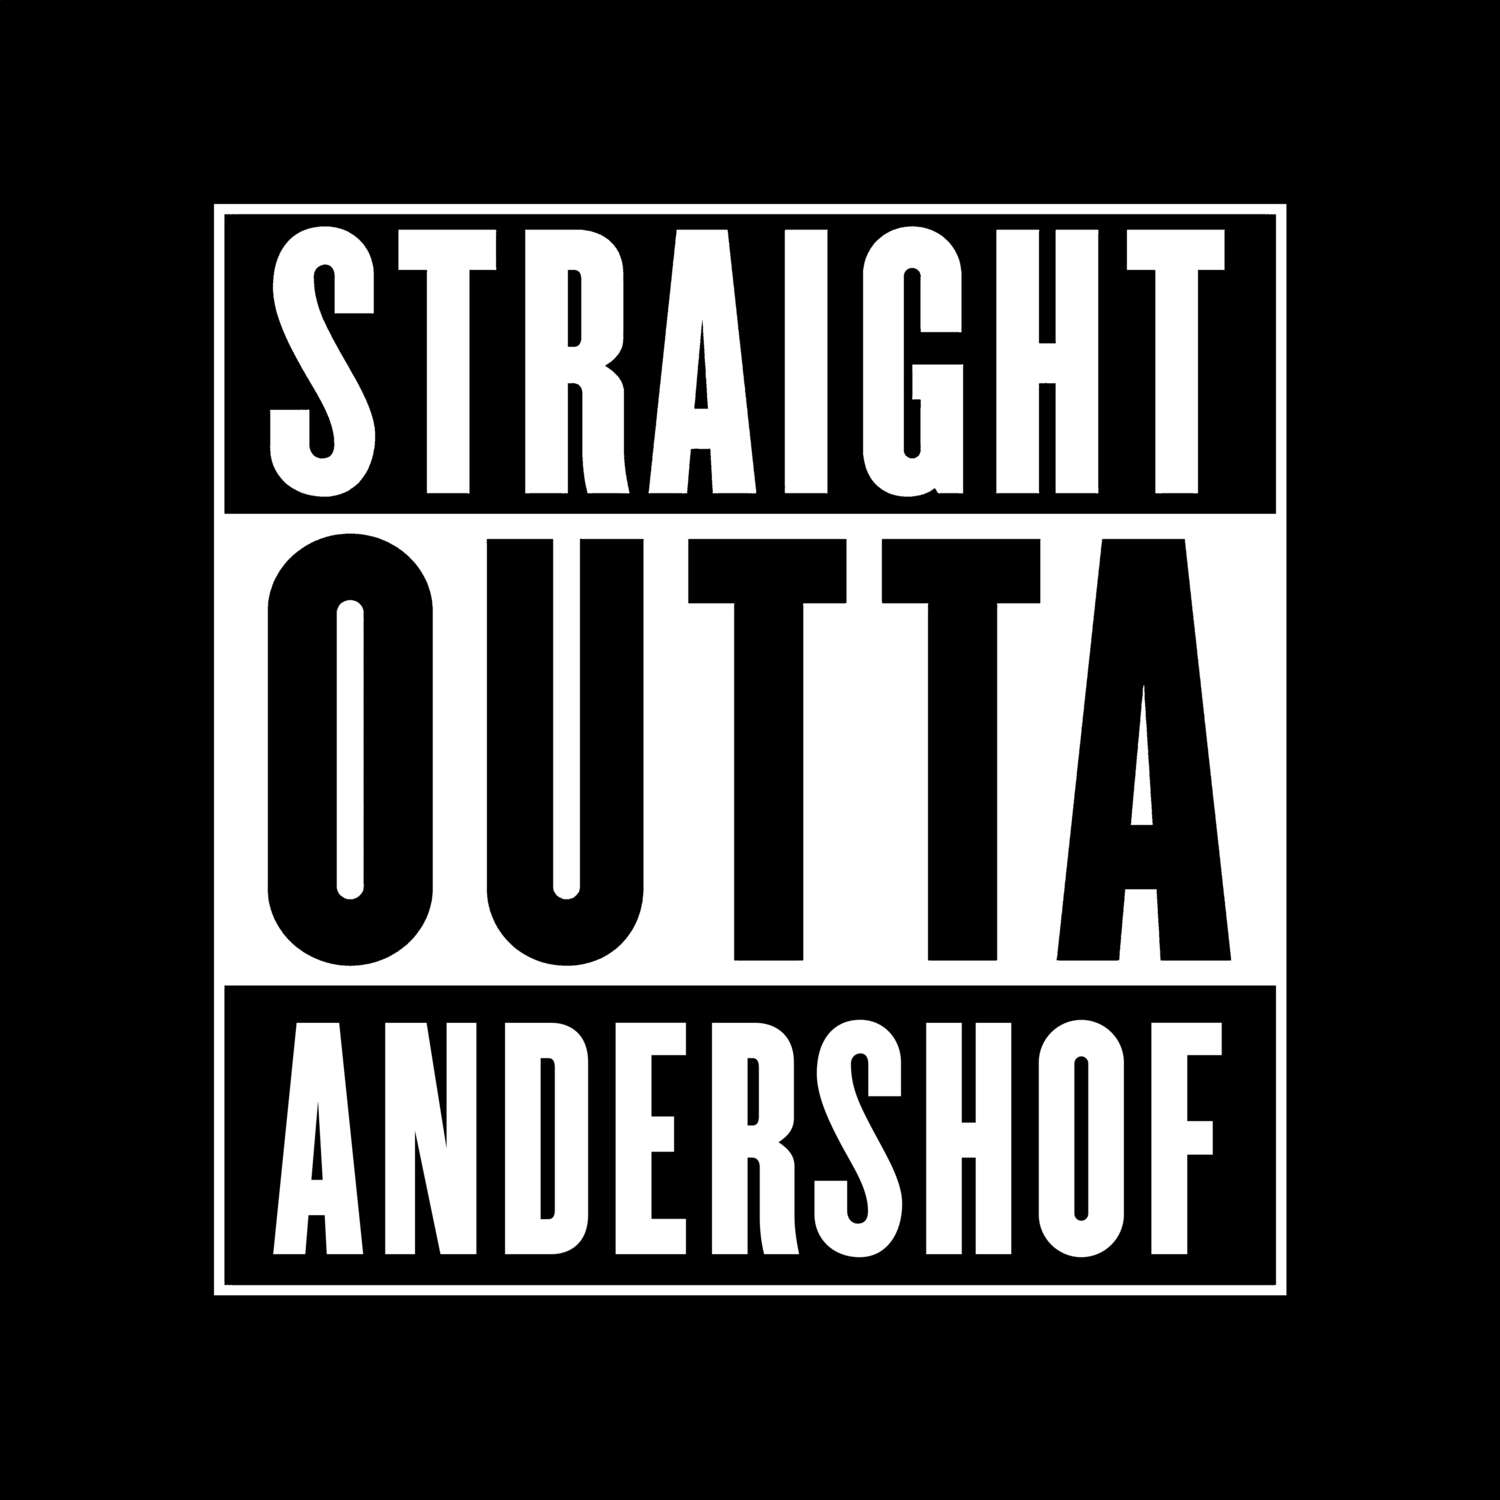 Andershof T-Shirt »Straight Outta«